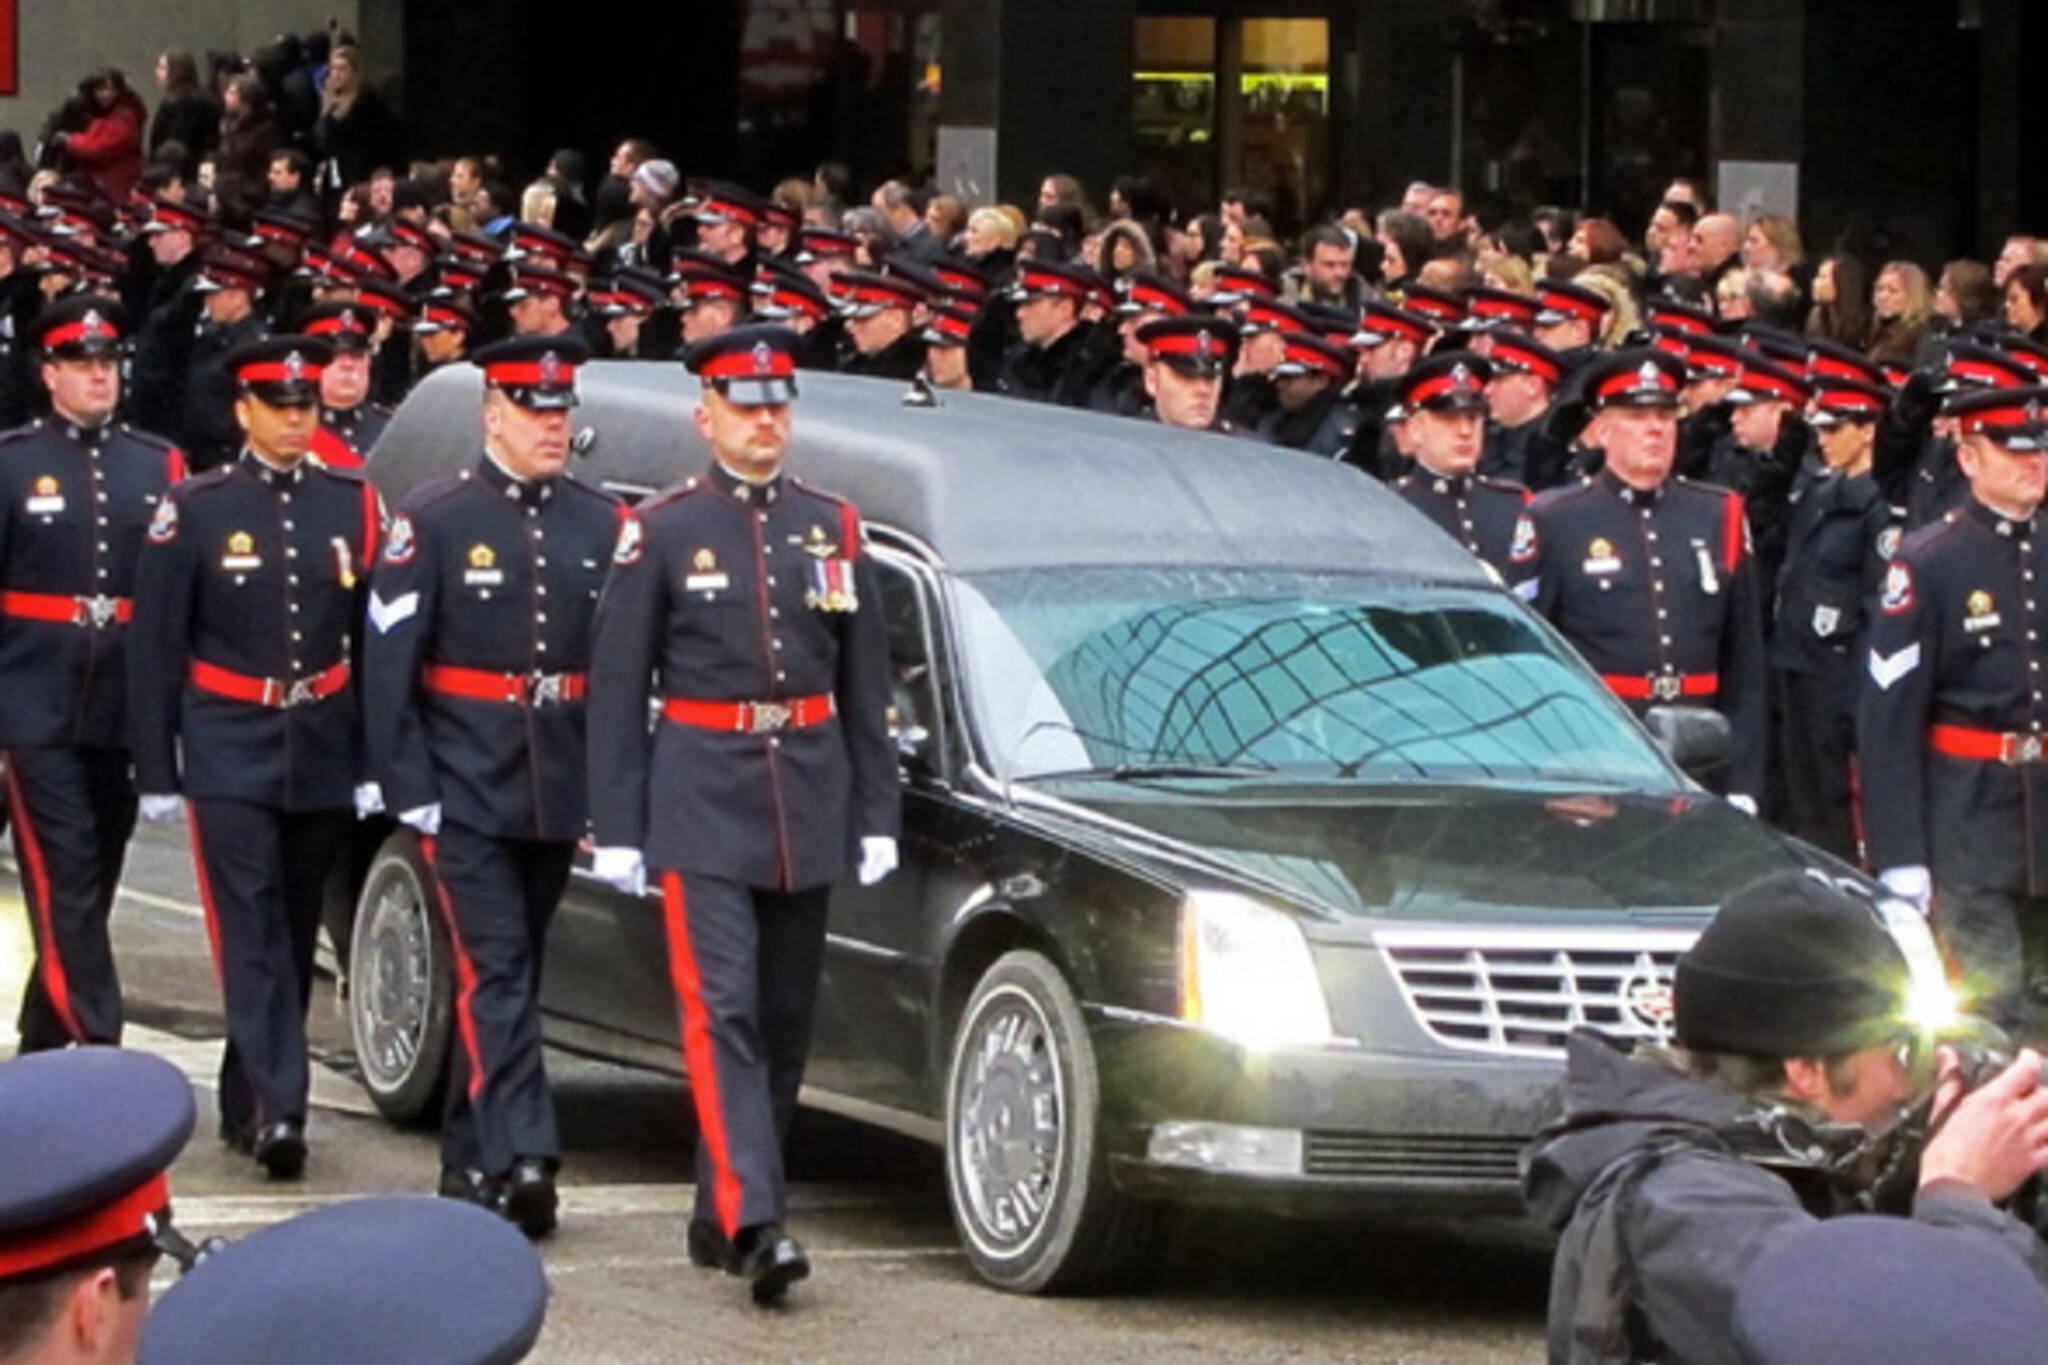 Ryan Russel Funeral Toronto